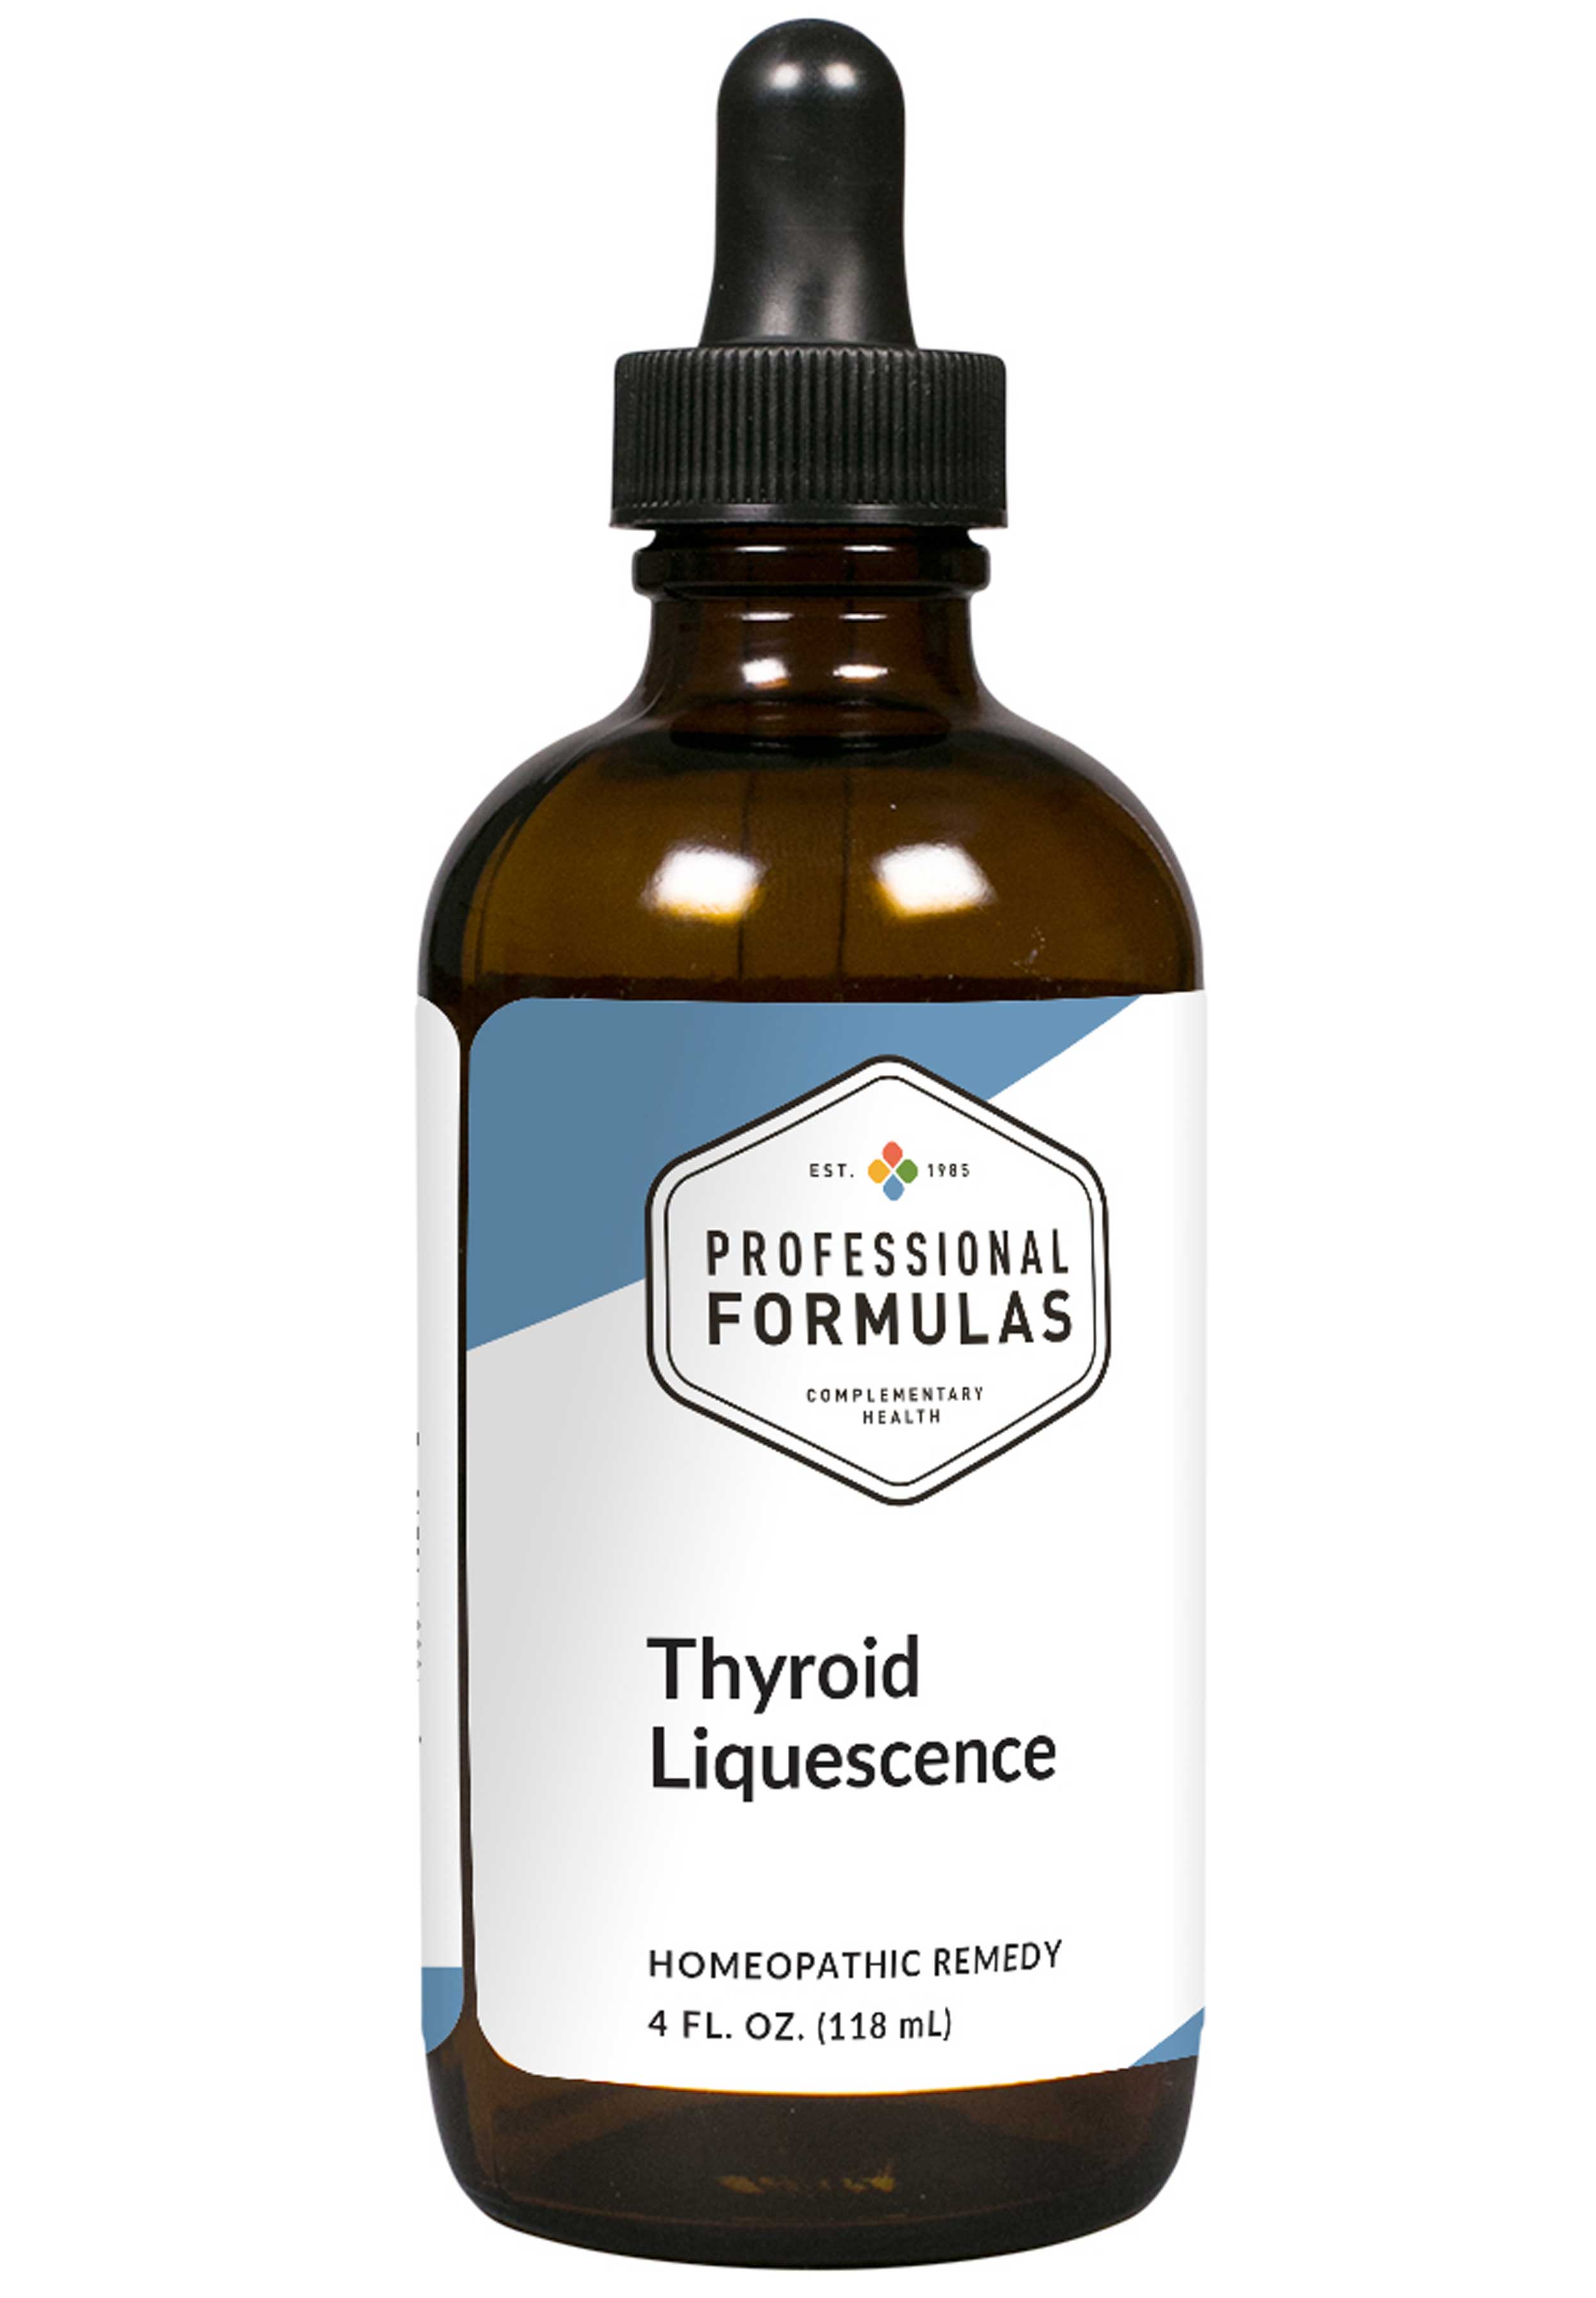 Professional Formulas Thyroid Liquescence